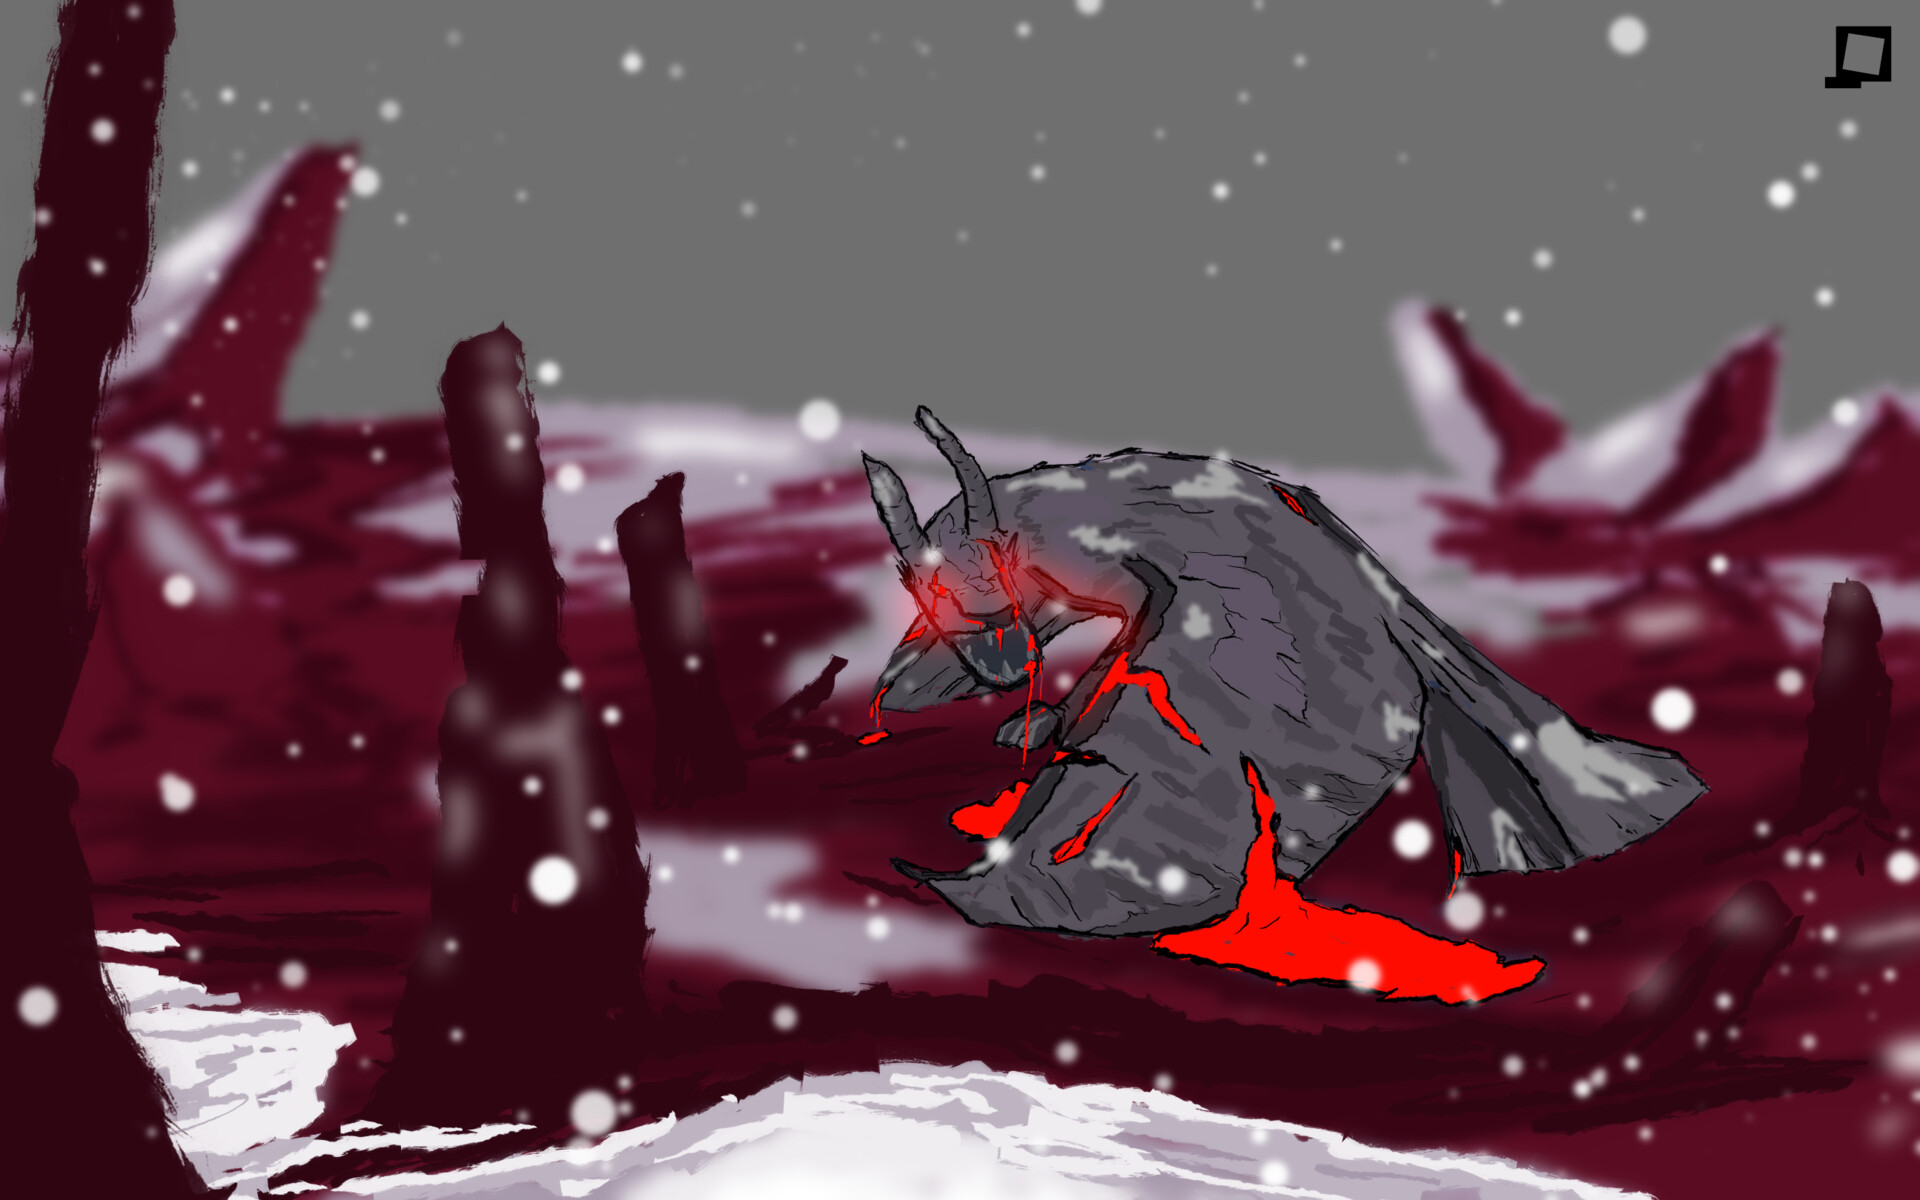 ArtStation - Dragon bleeding under the snow